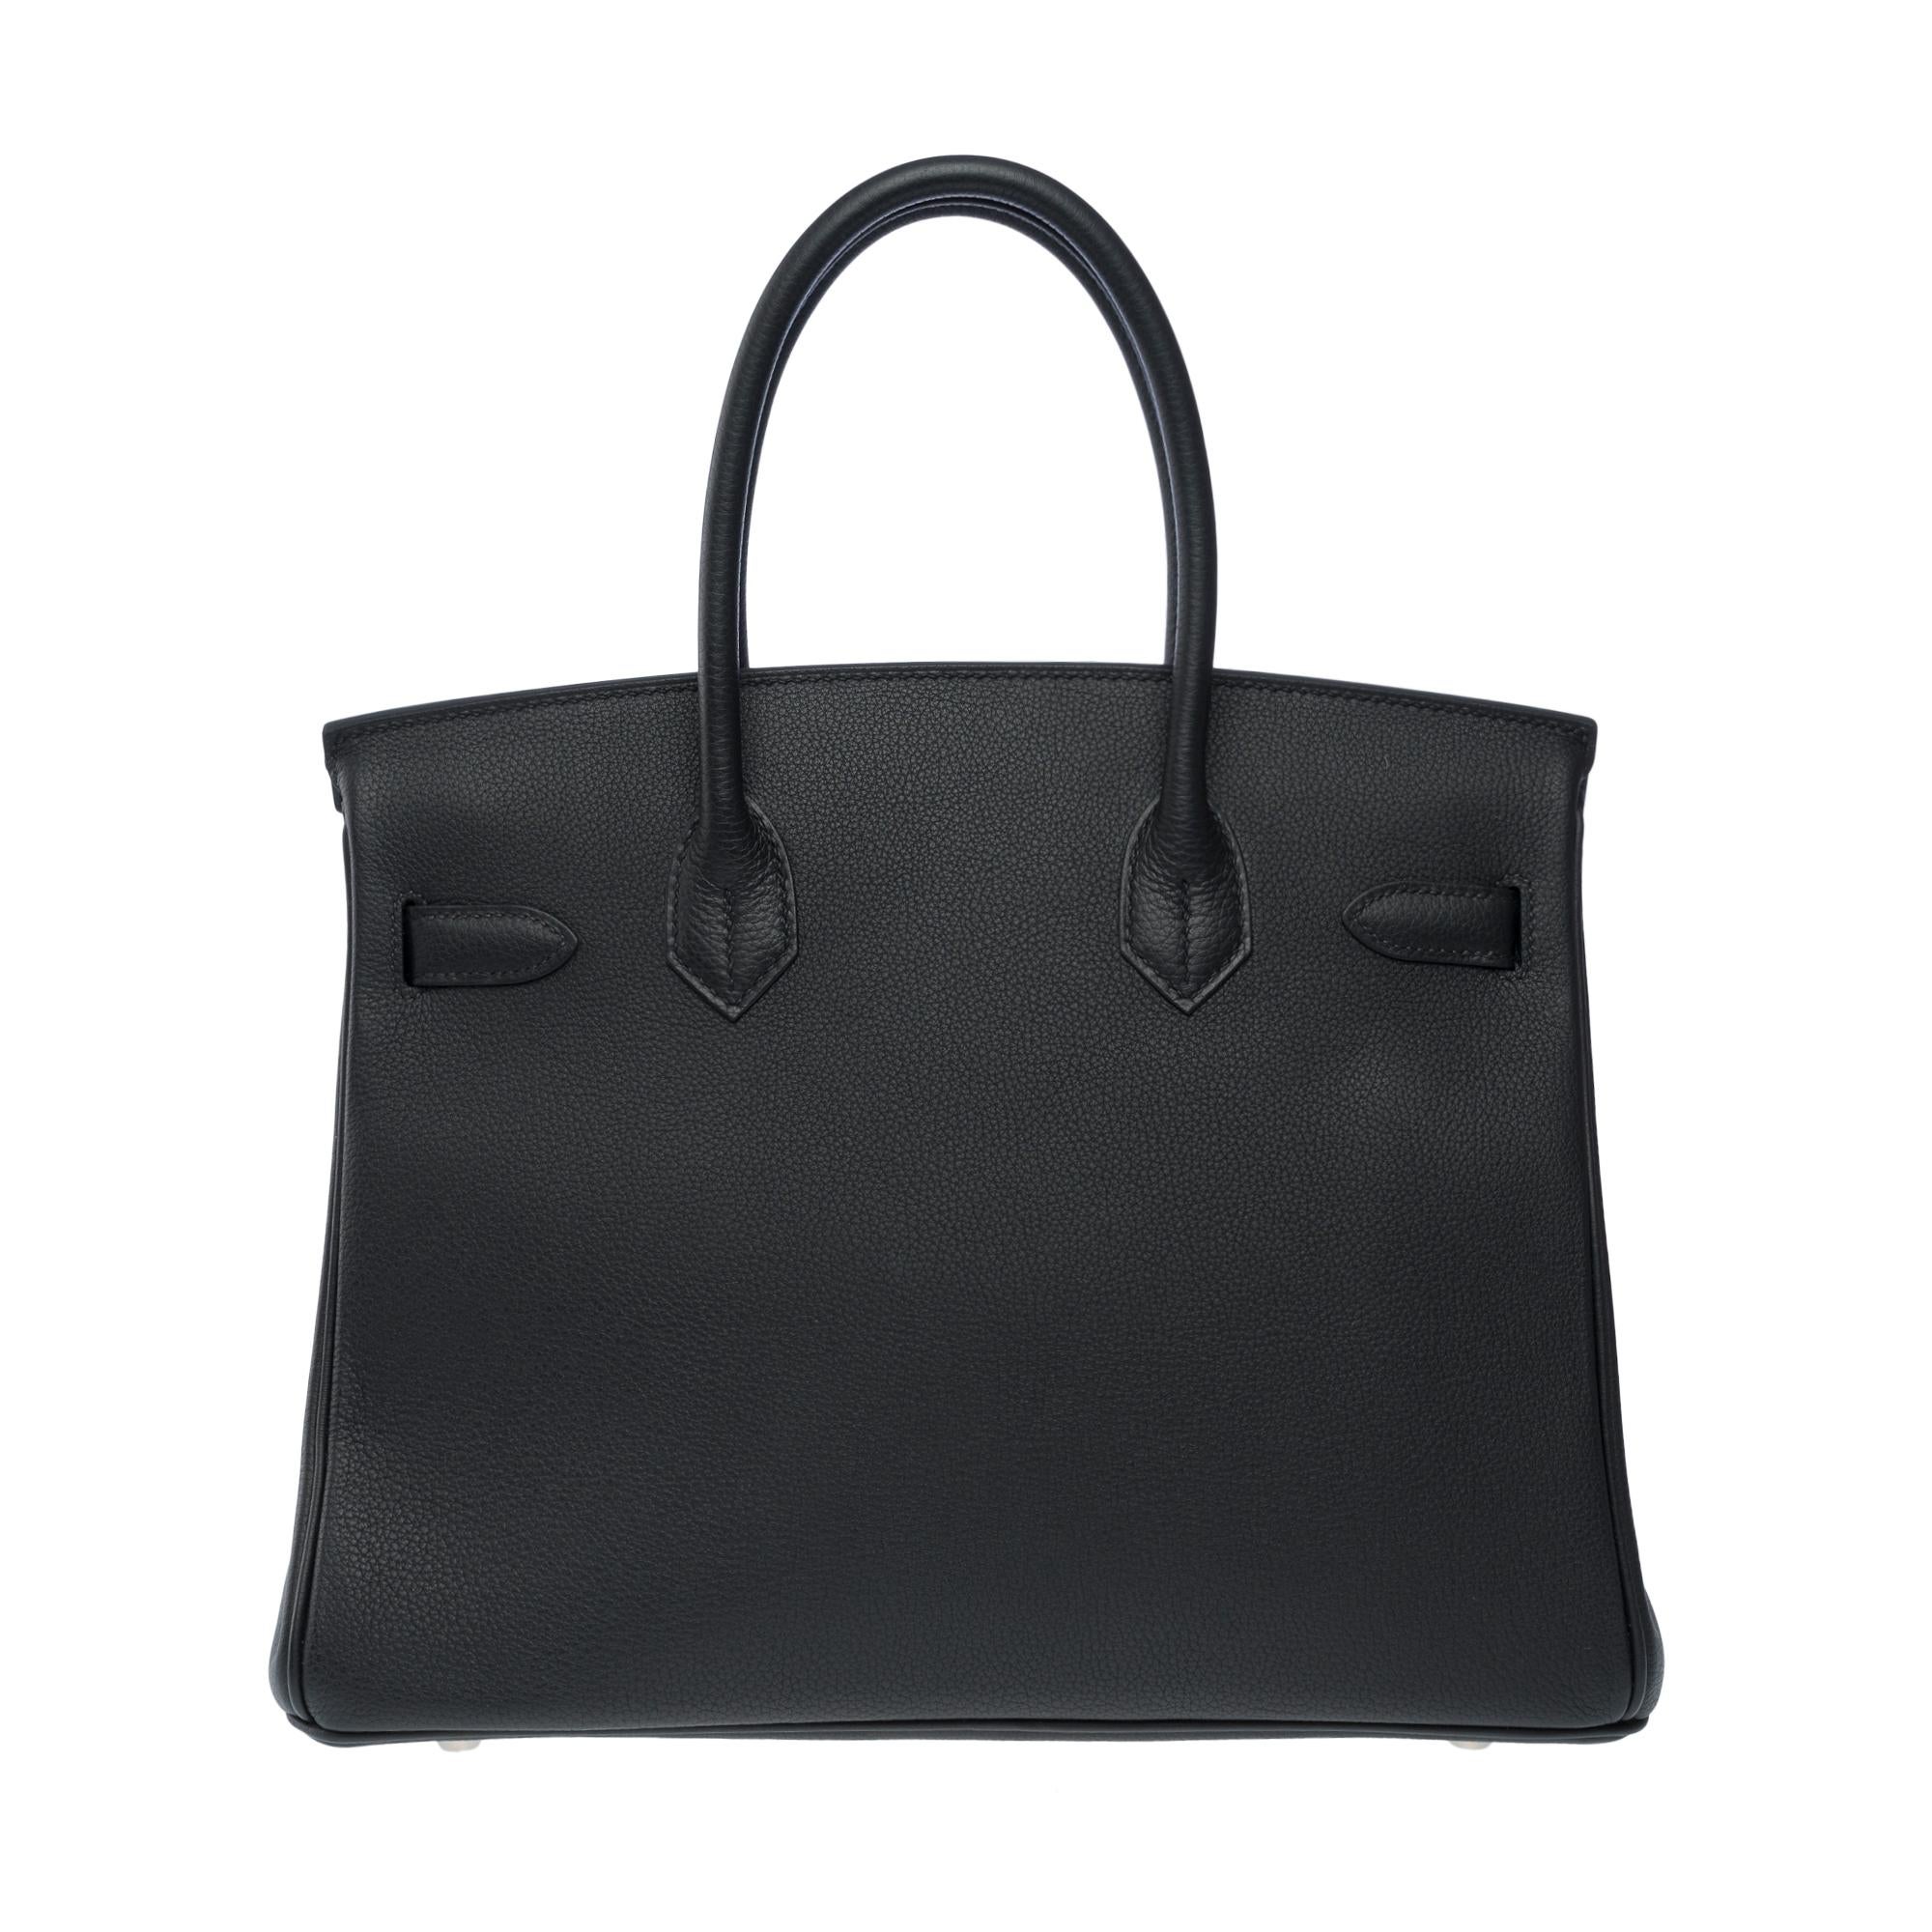 Splendid Hermes Birkin 30 handbag in Black Togo leather, SHW In Excellent Condition For Sale In Paris, IDF